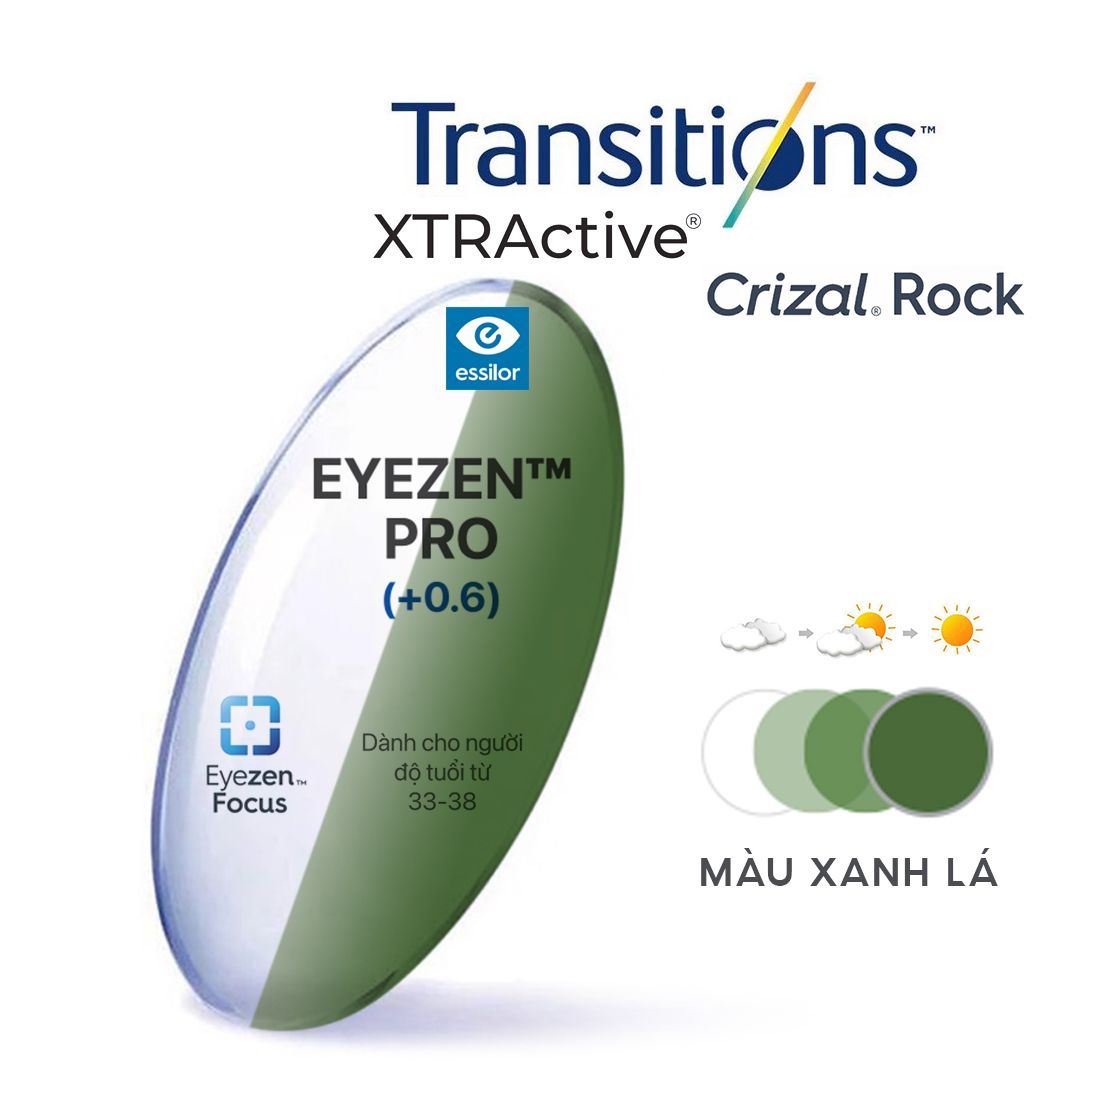  Tròng kính Essilor Eyezen Pro Xtractive đổi màu chiết suất 1.67 váng phủ Crizal Rock 